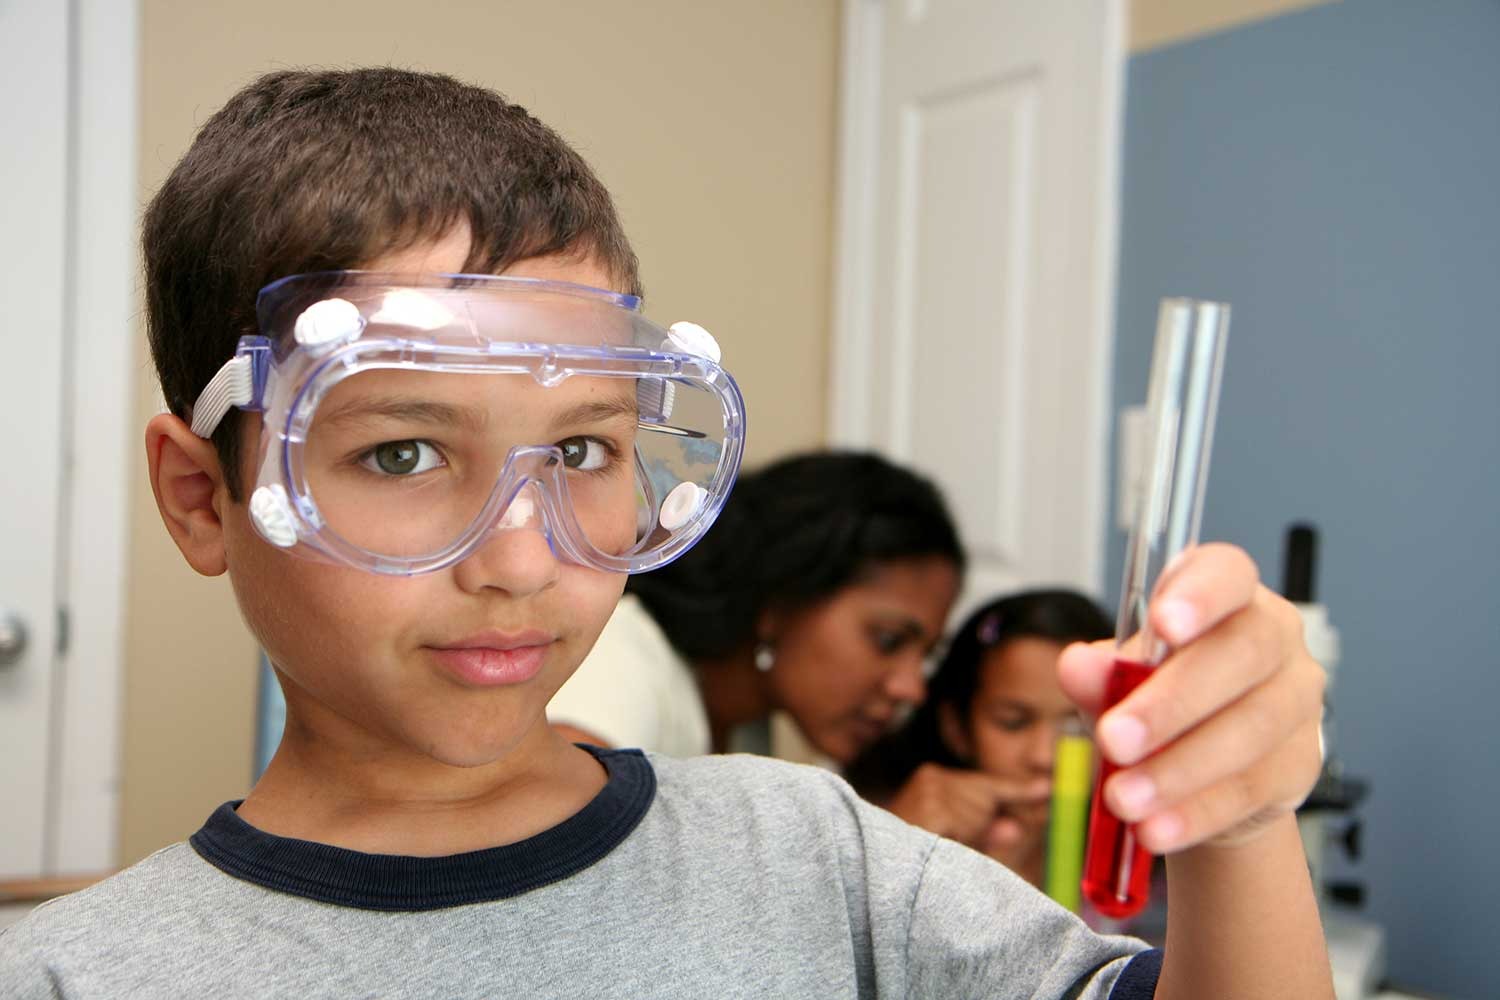 Children's Eye and Health Safety boy lab goggles